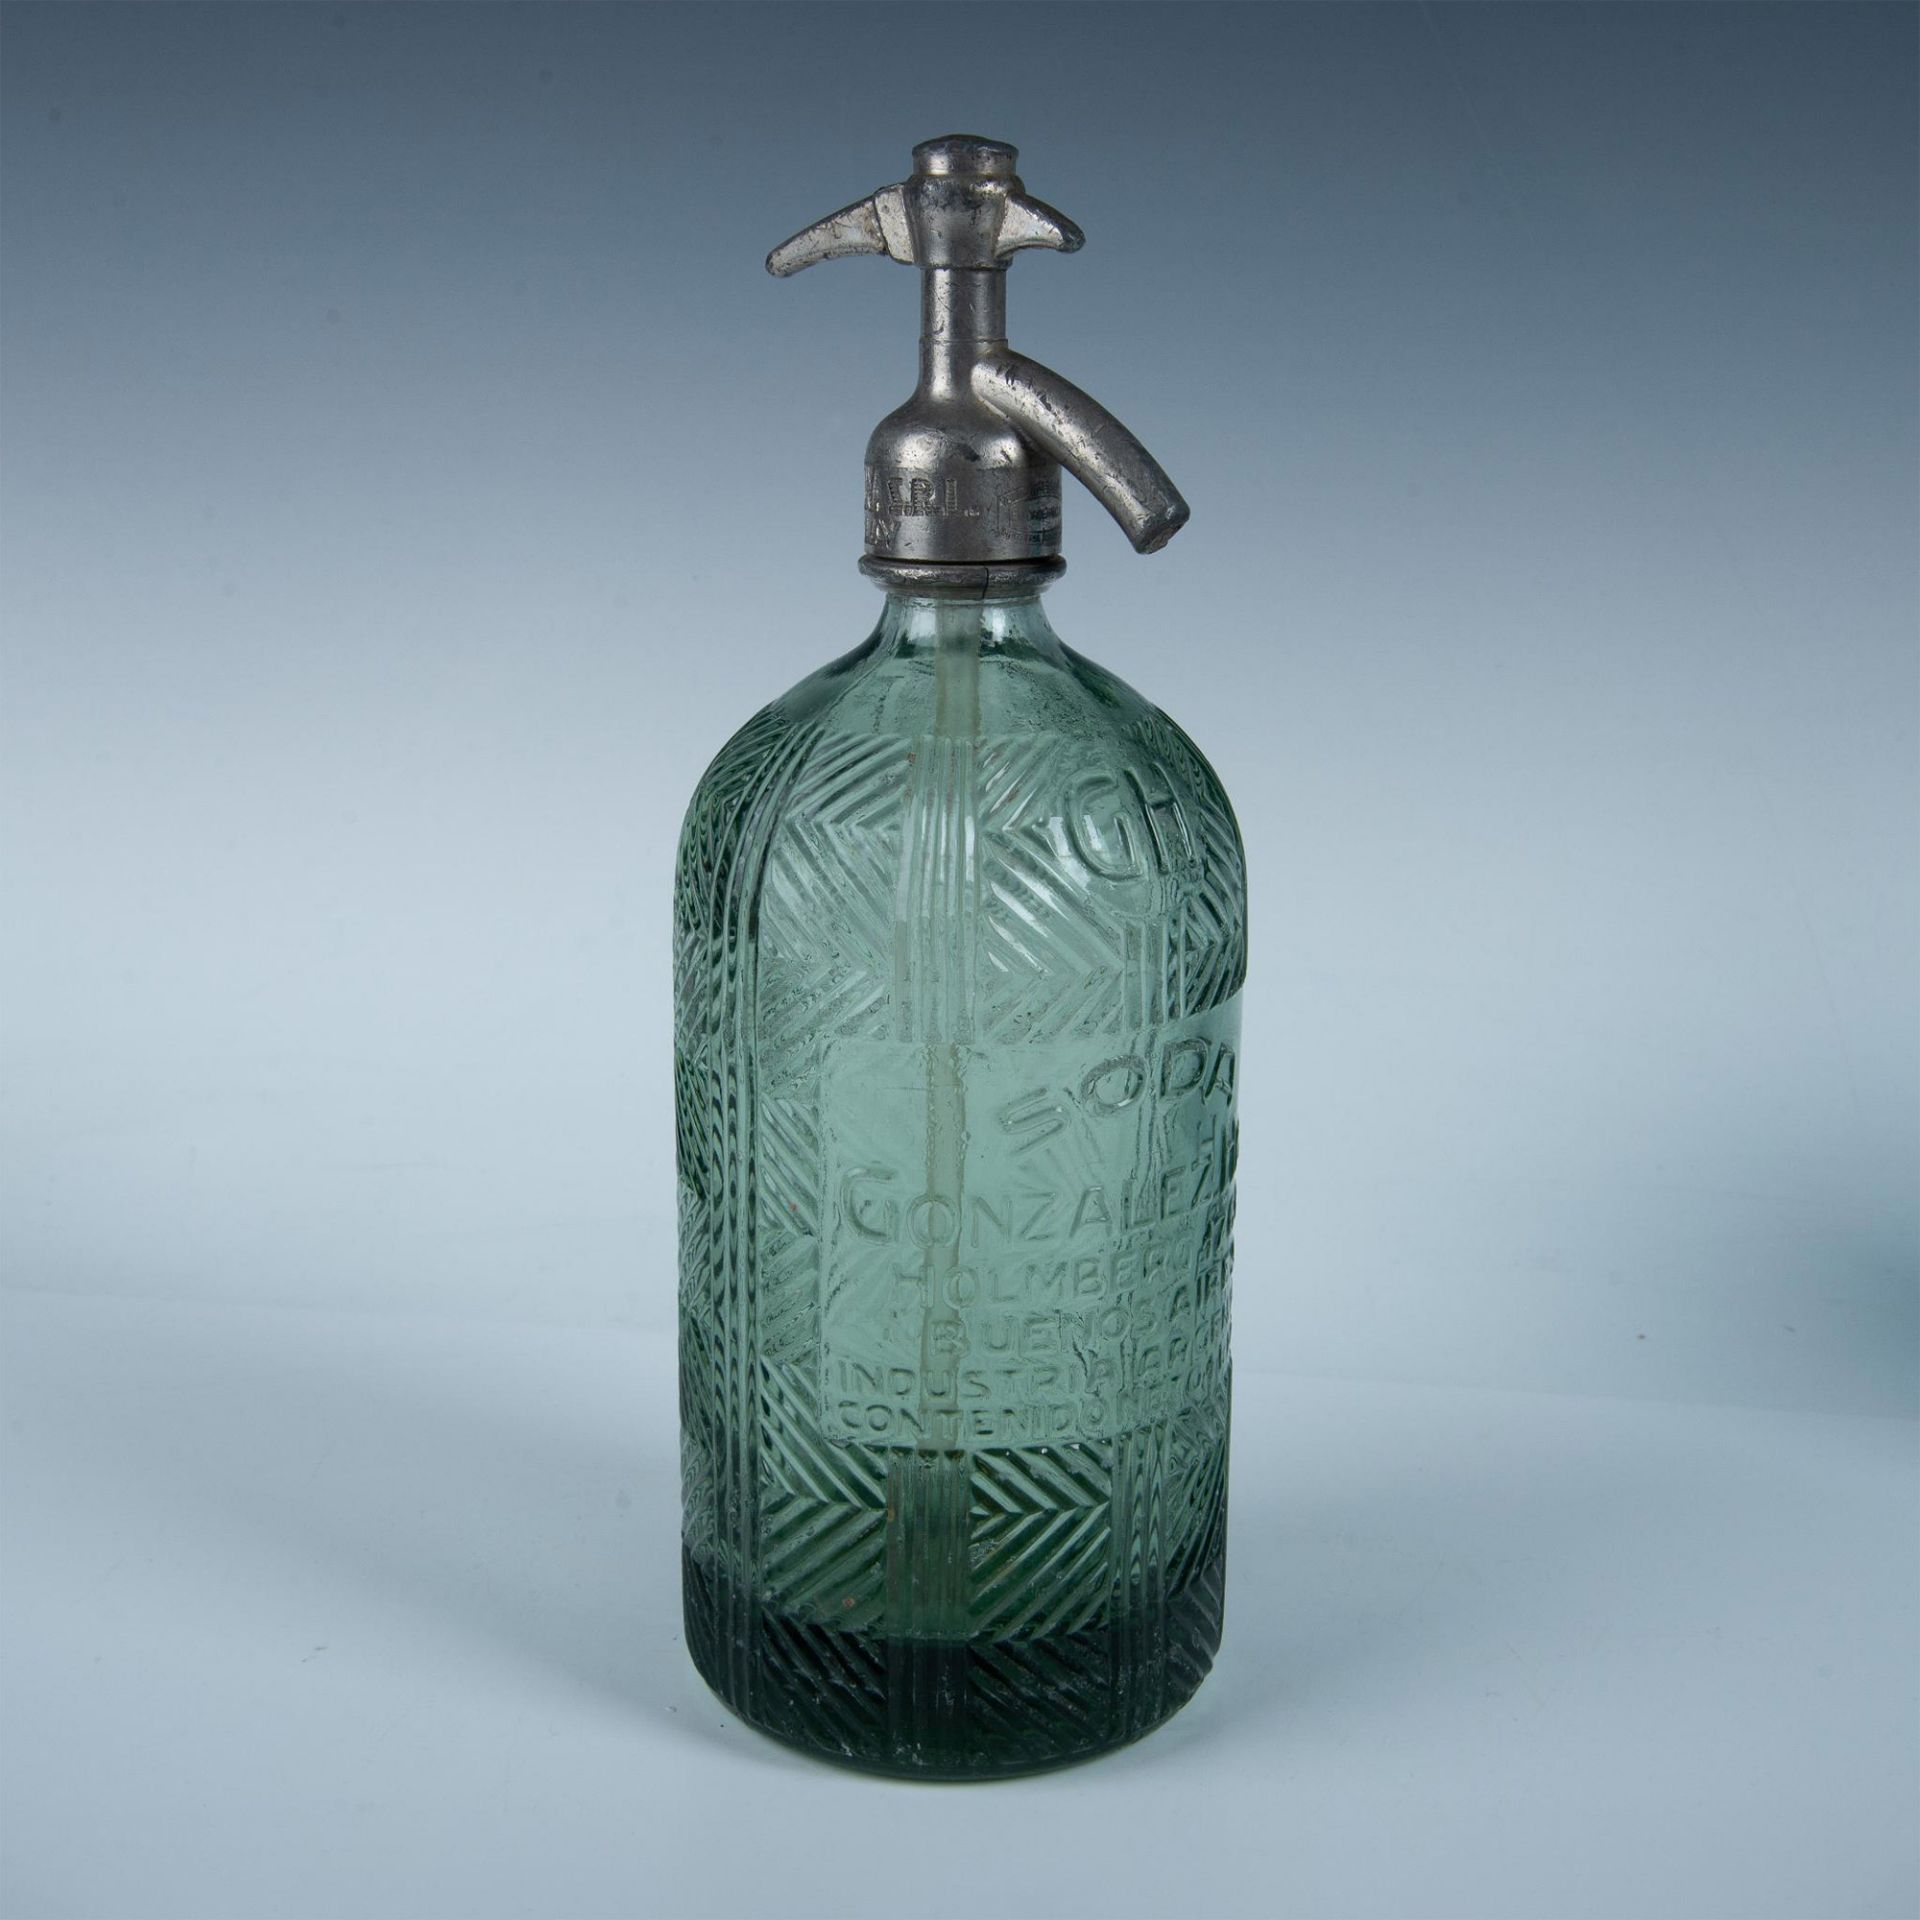 Antique Seltzer Bottle Gonzalez Hnos, Argentina - Image 3 of 7